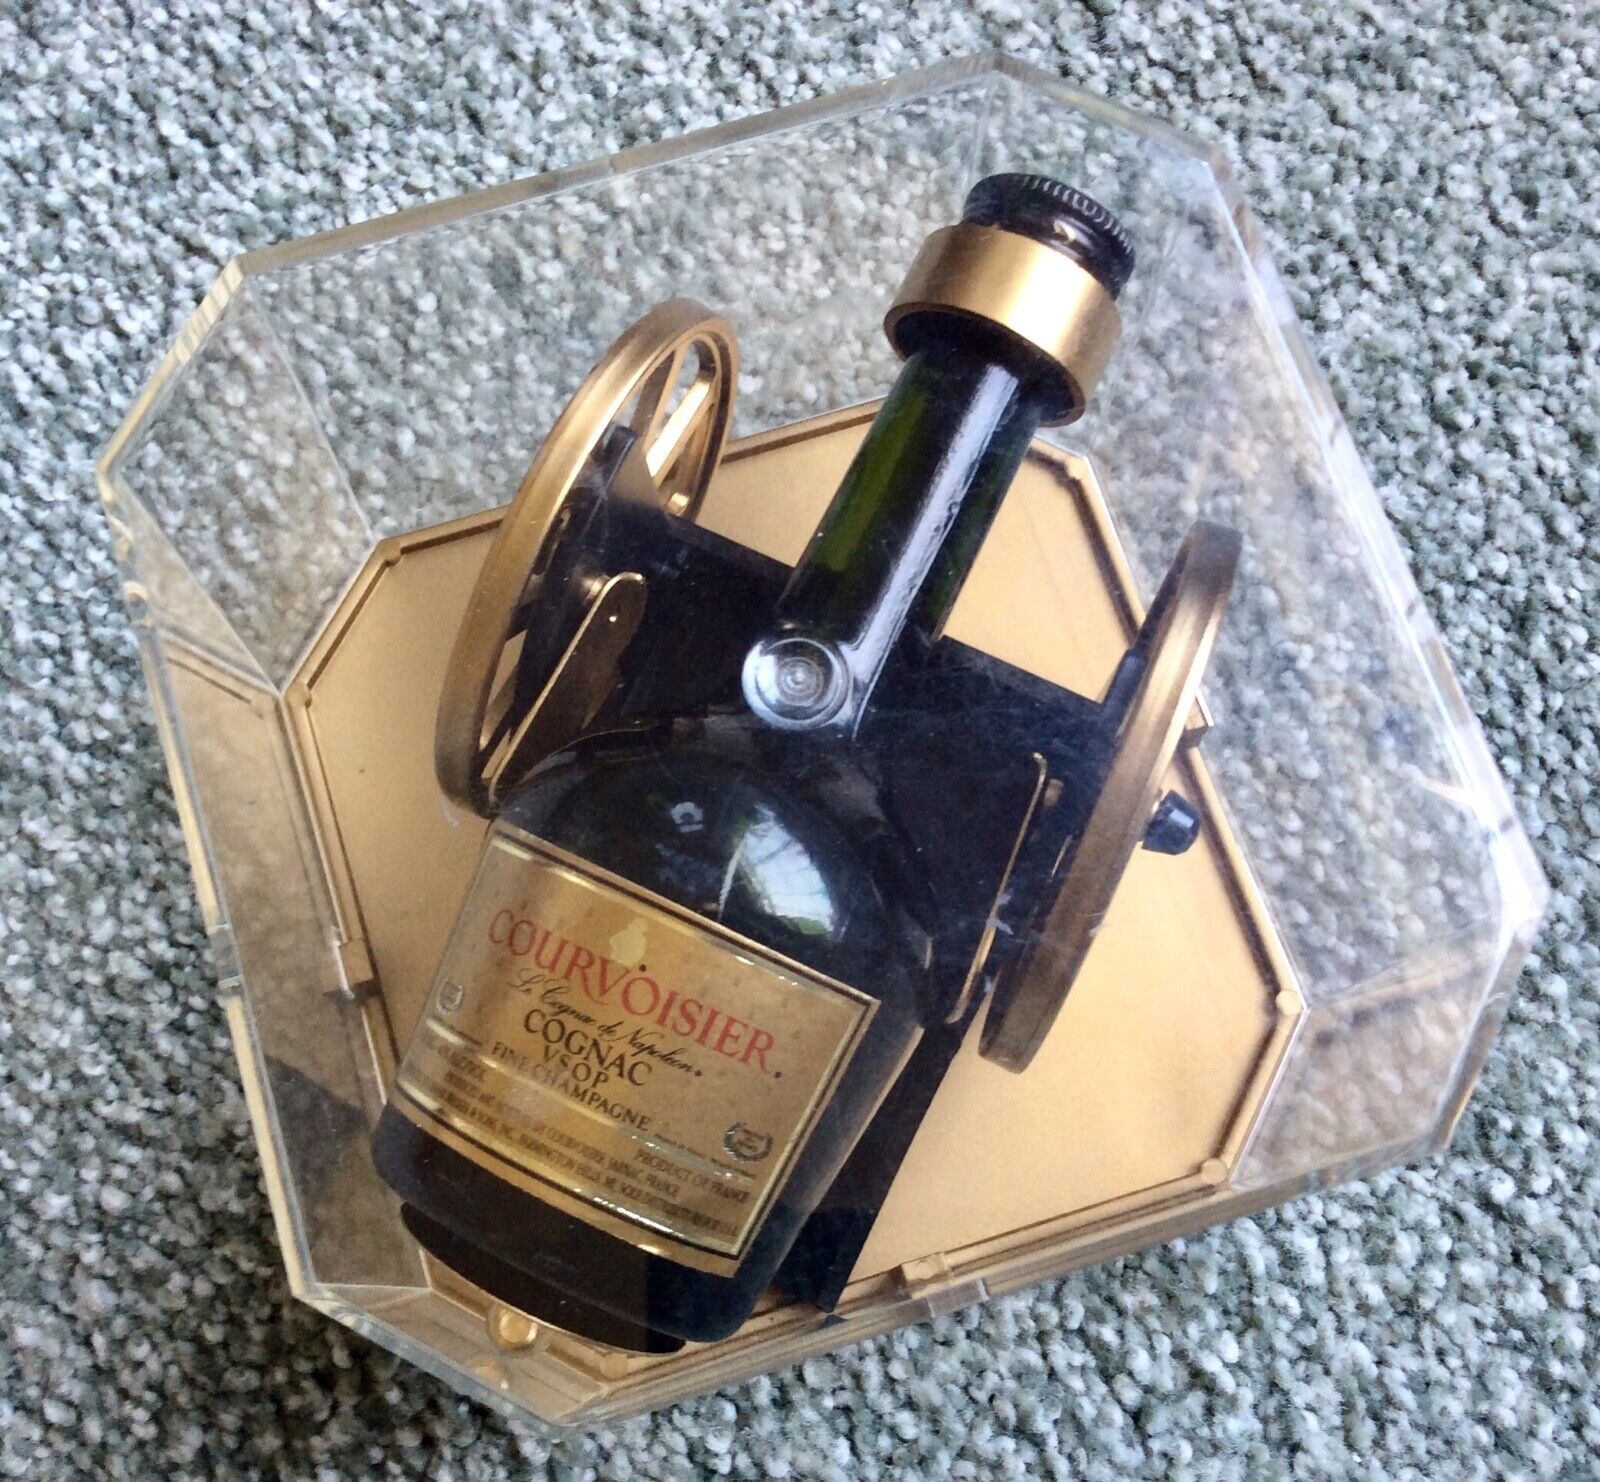 NEW, UNOPENED Vtg Miniature Courvoisier Cognac Bottle, Cannon Display Case